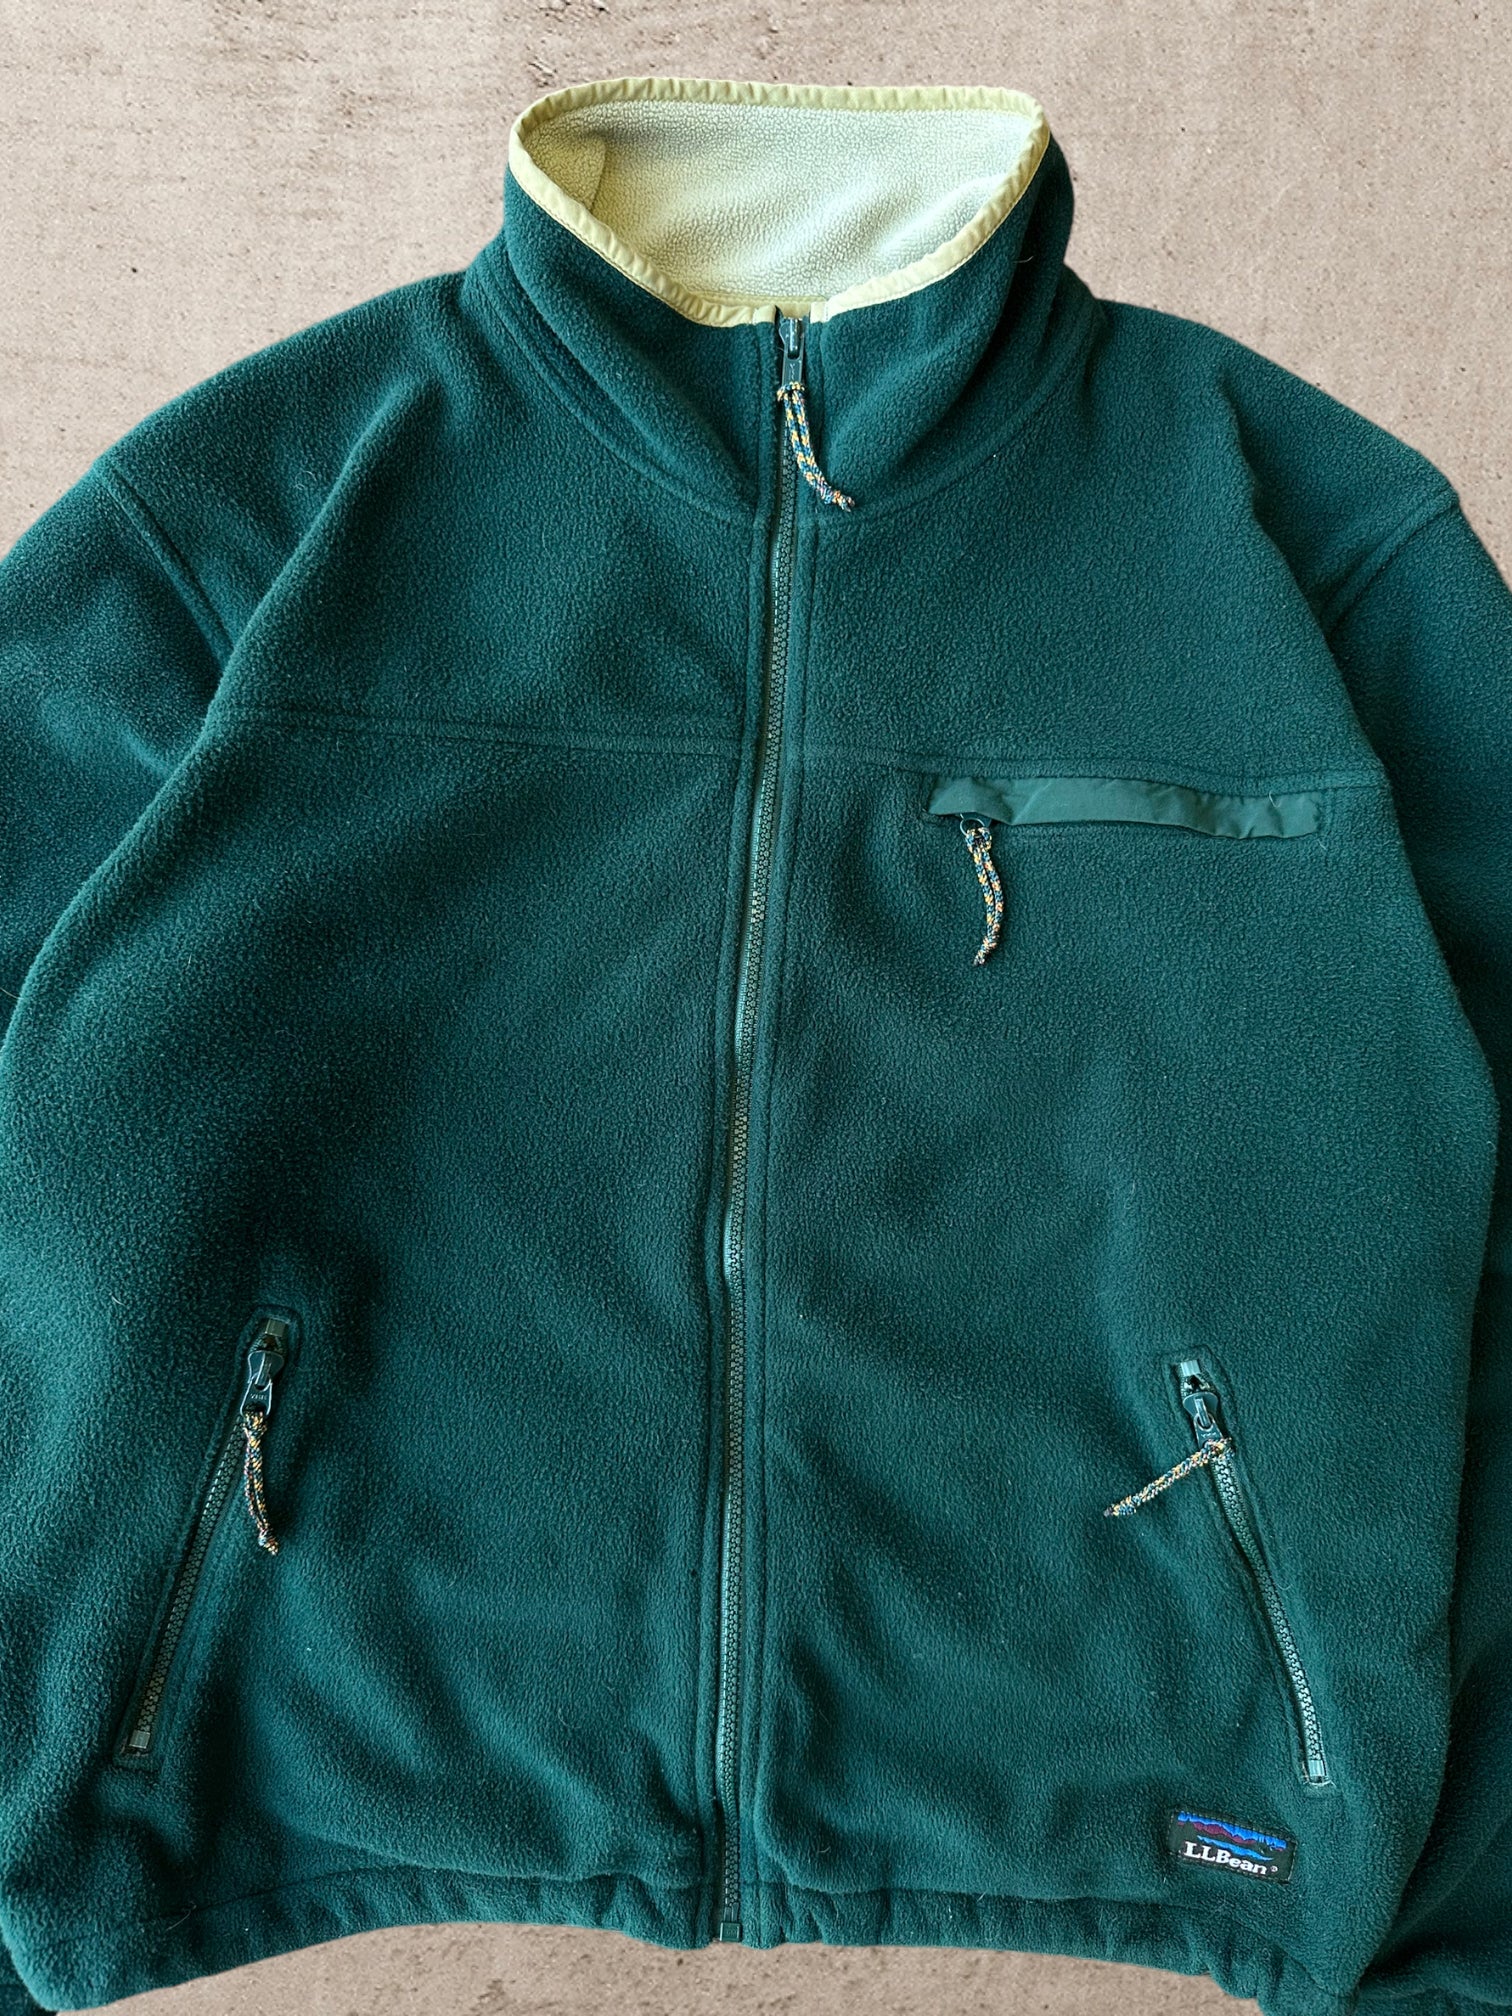 90s L.L Bean Green Fleece Jacket - Large